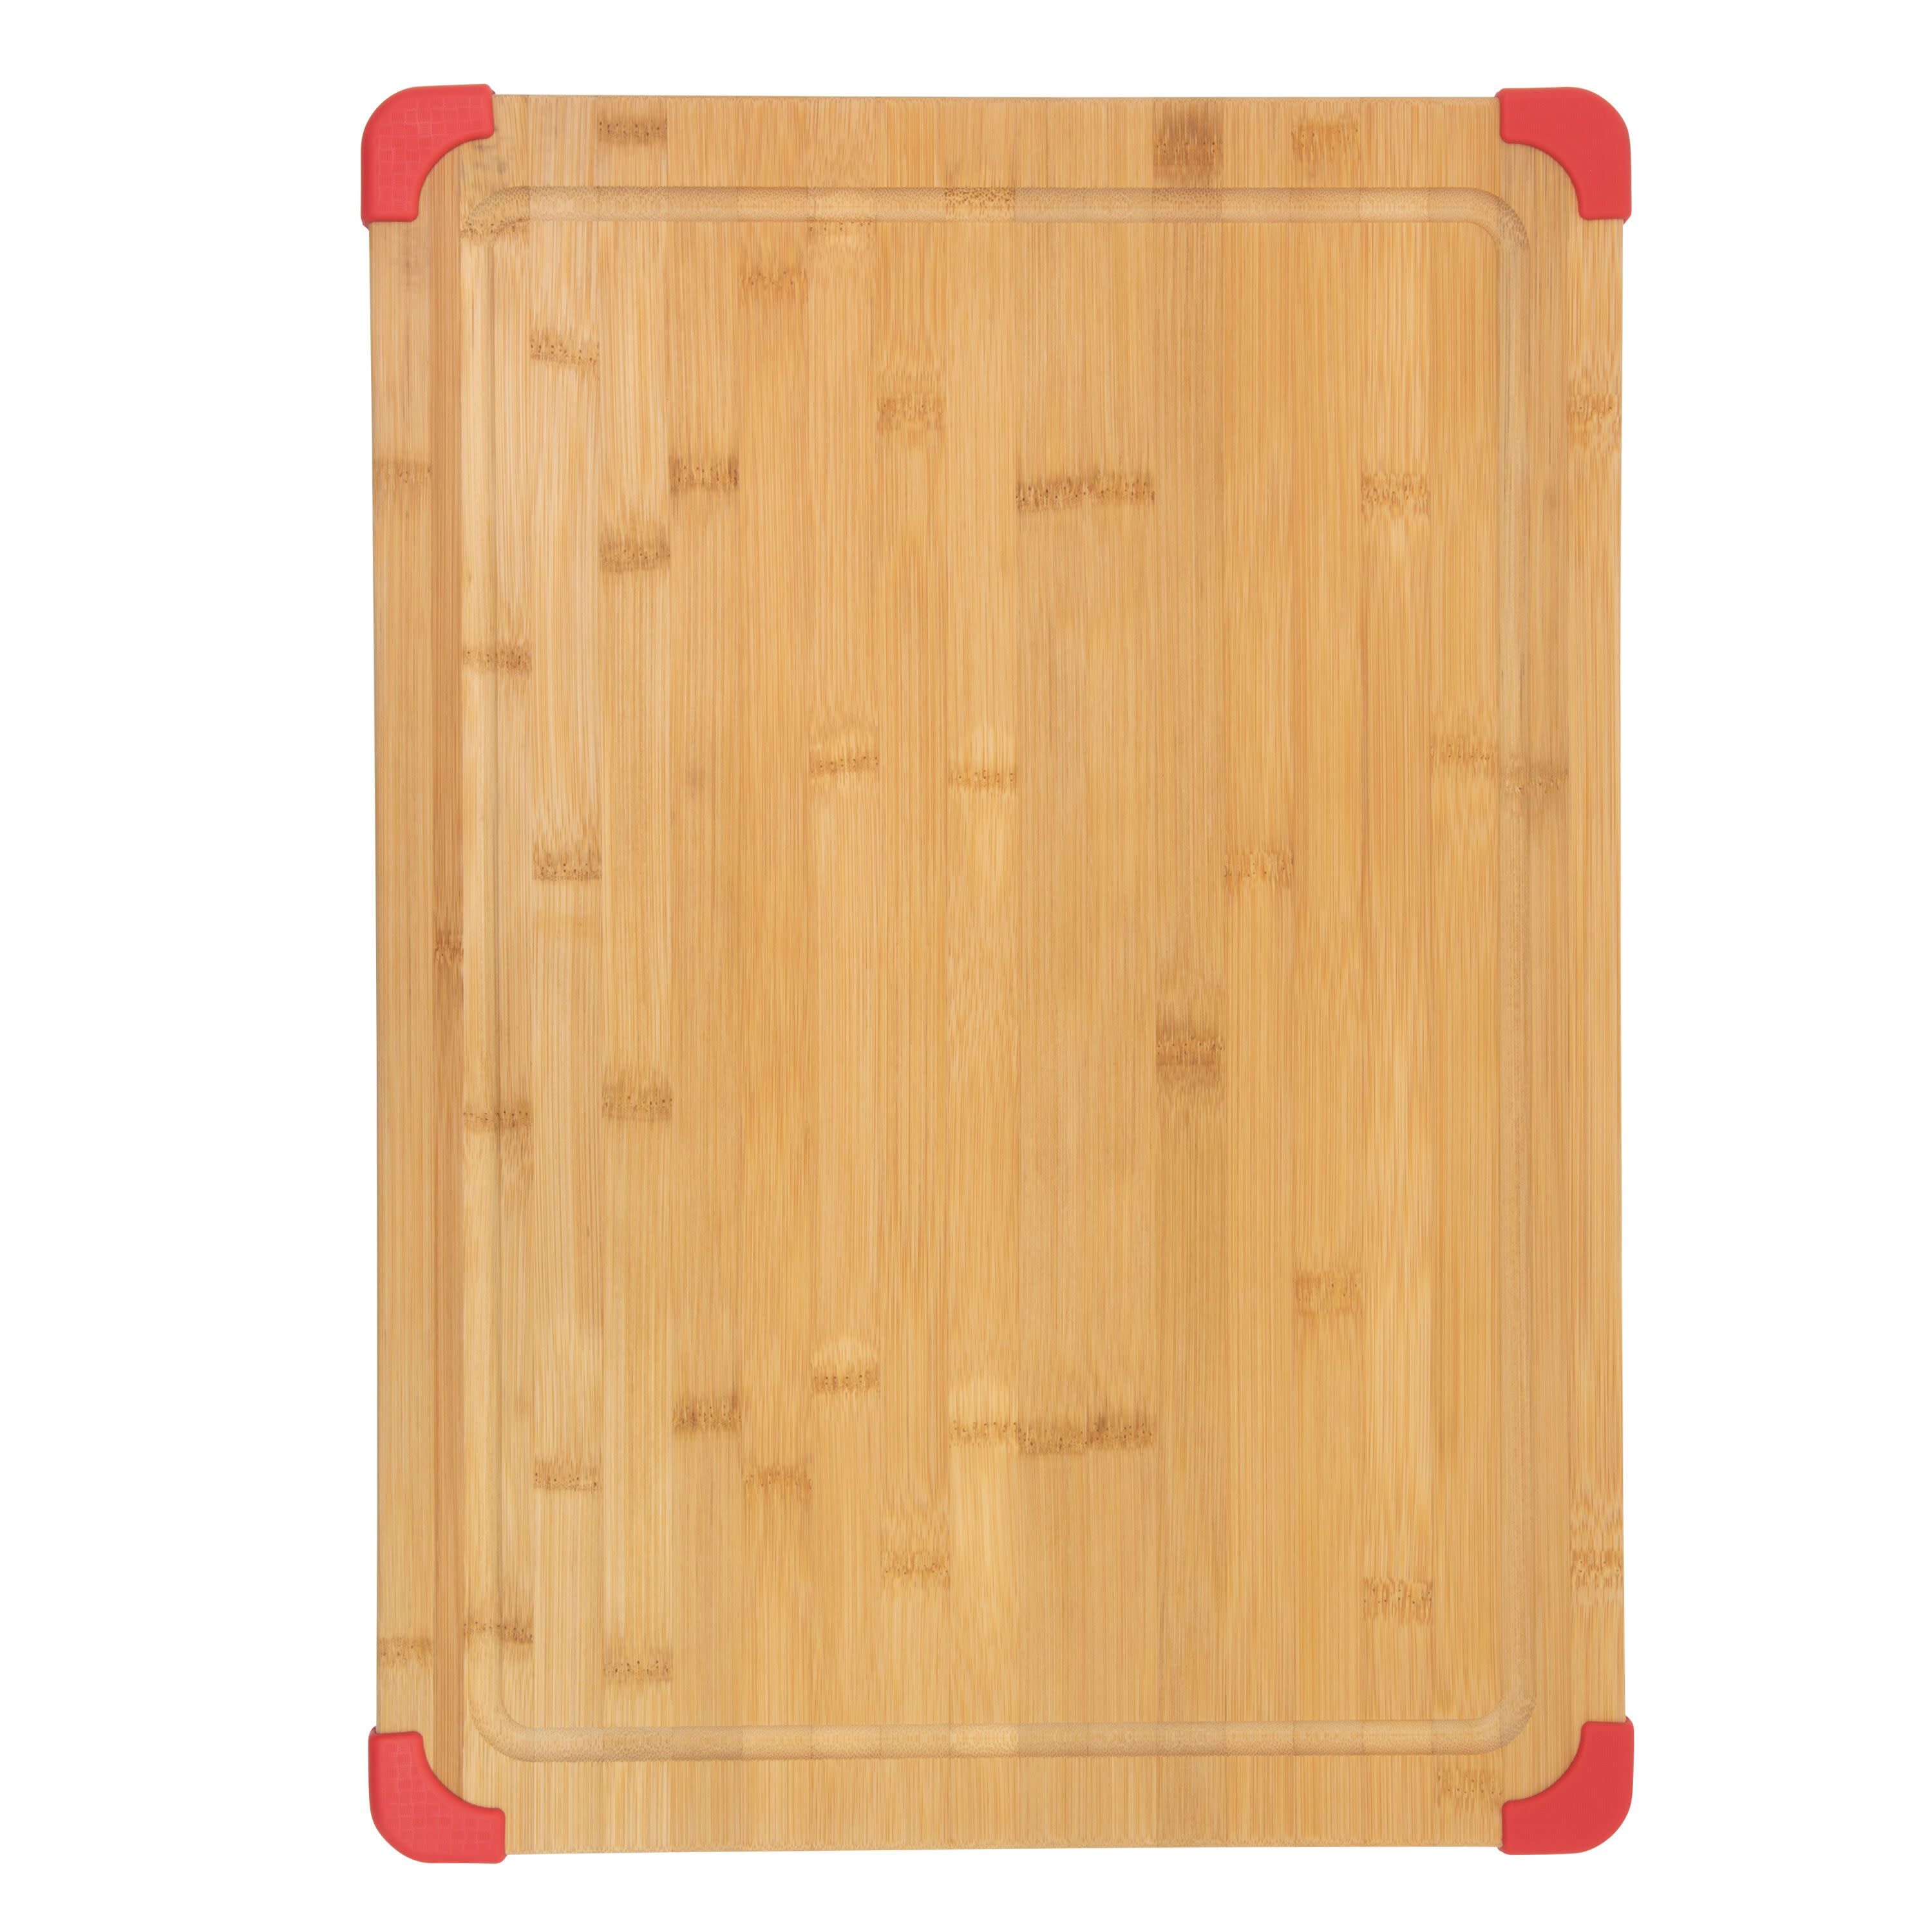 Oak Chopping Board Paris Handcrafted Medium Wooden Serving Platter Cheese Board